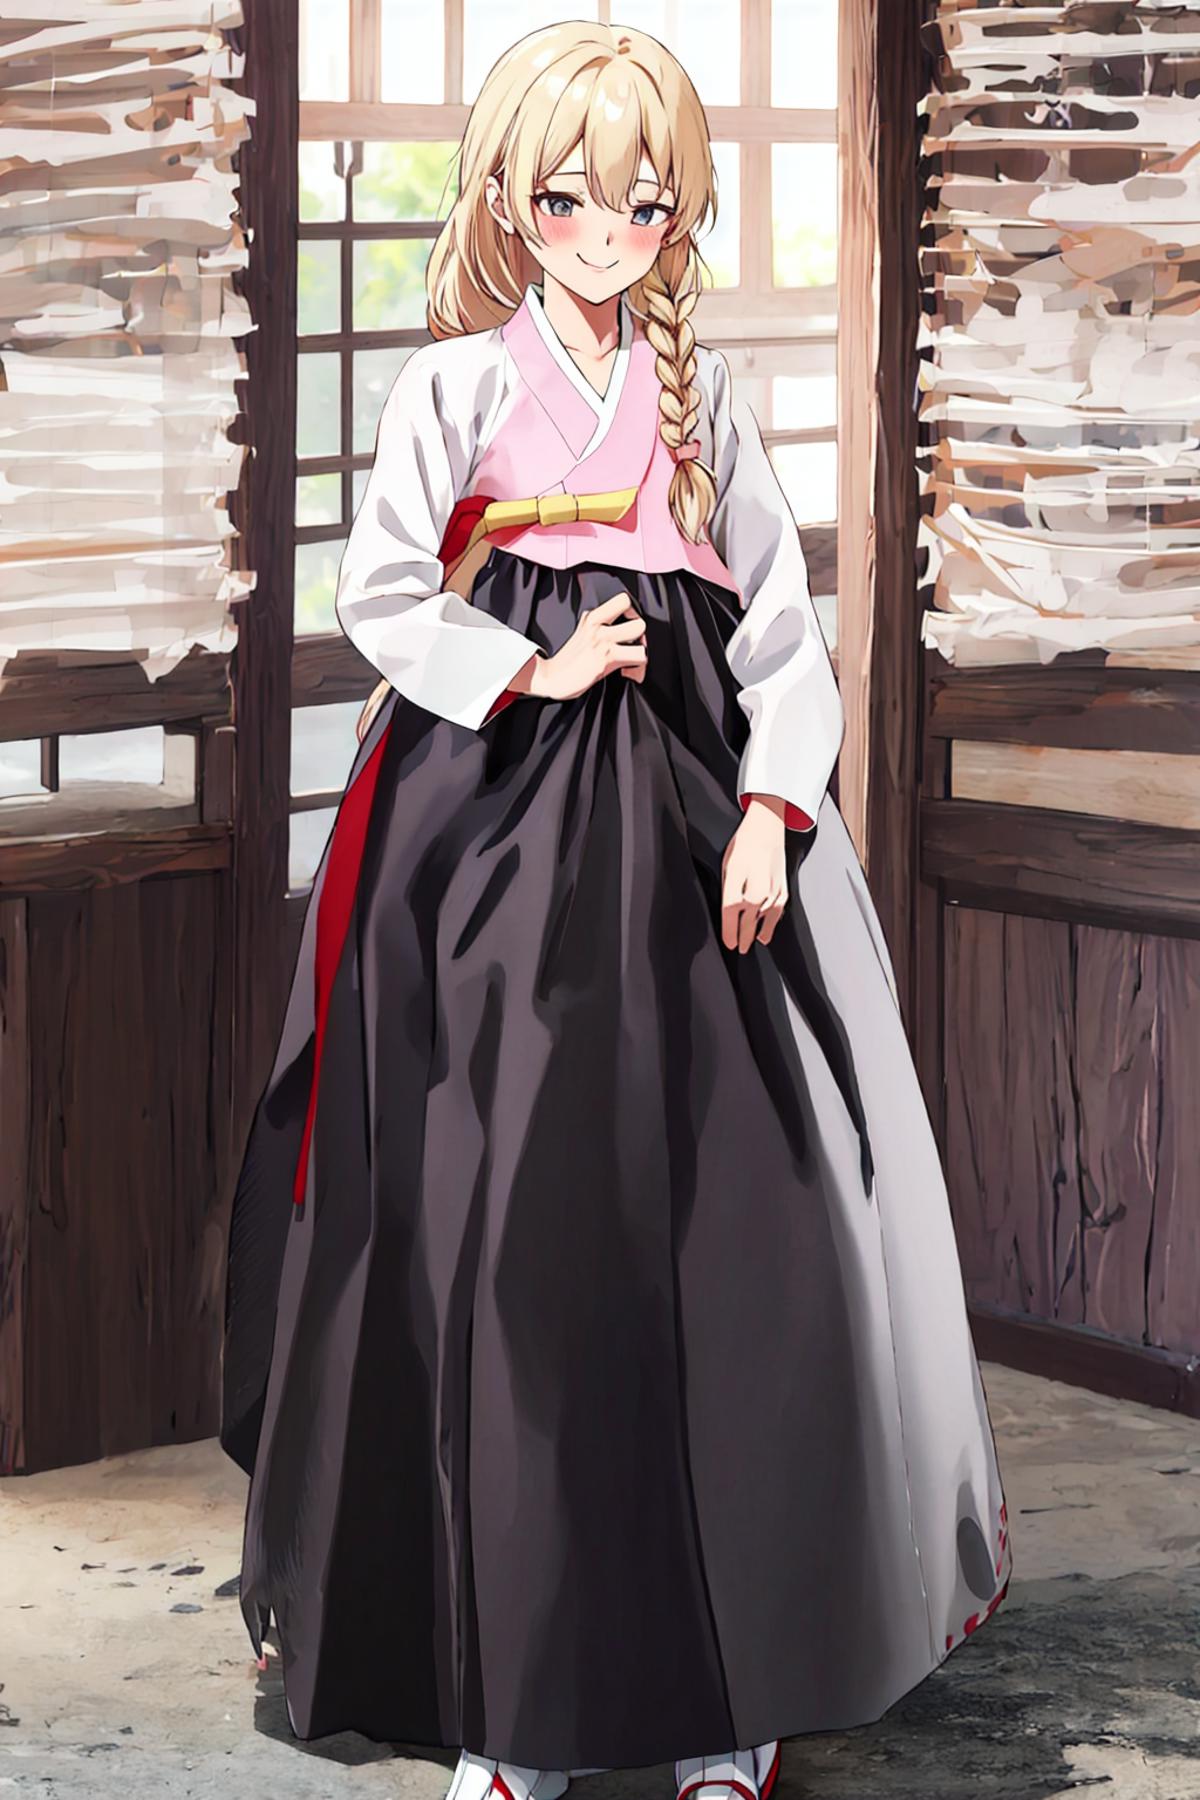 Female Noble Class Hanbok - Korea Clothes image by asnr3shine